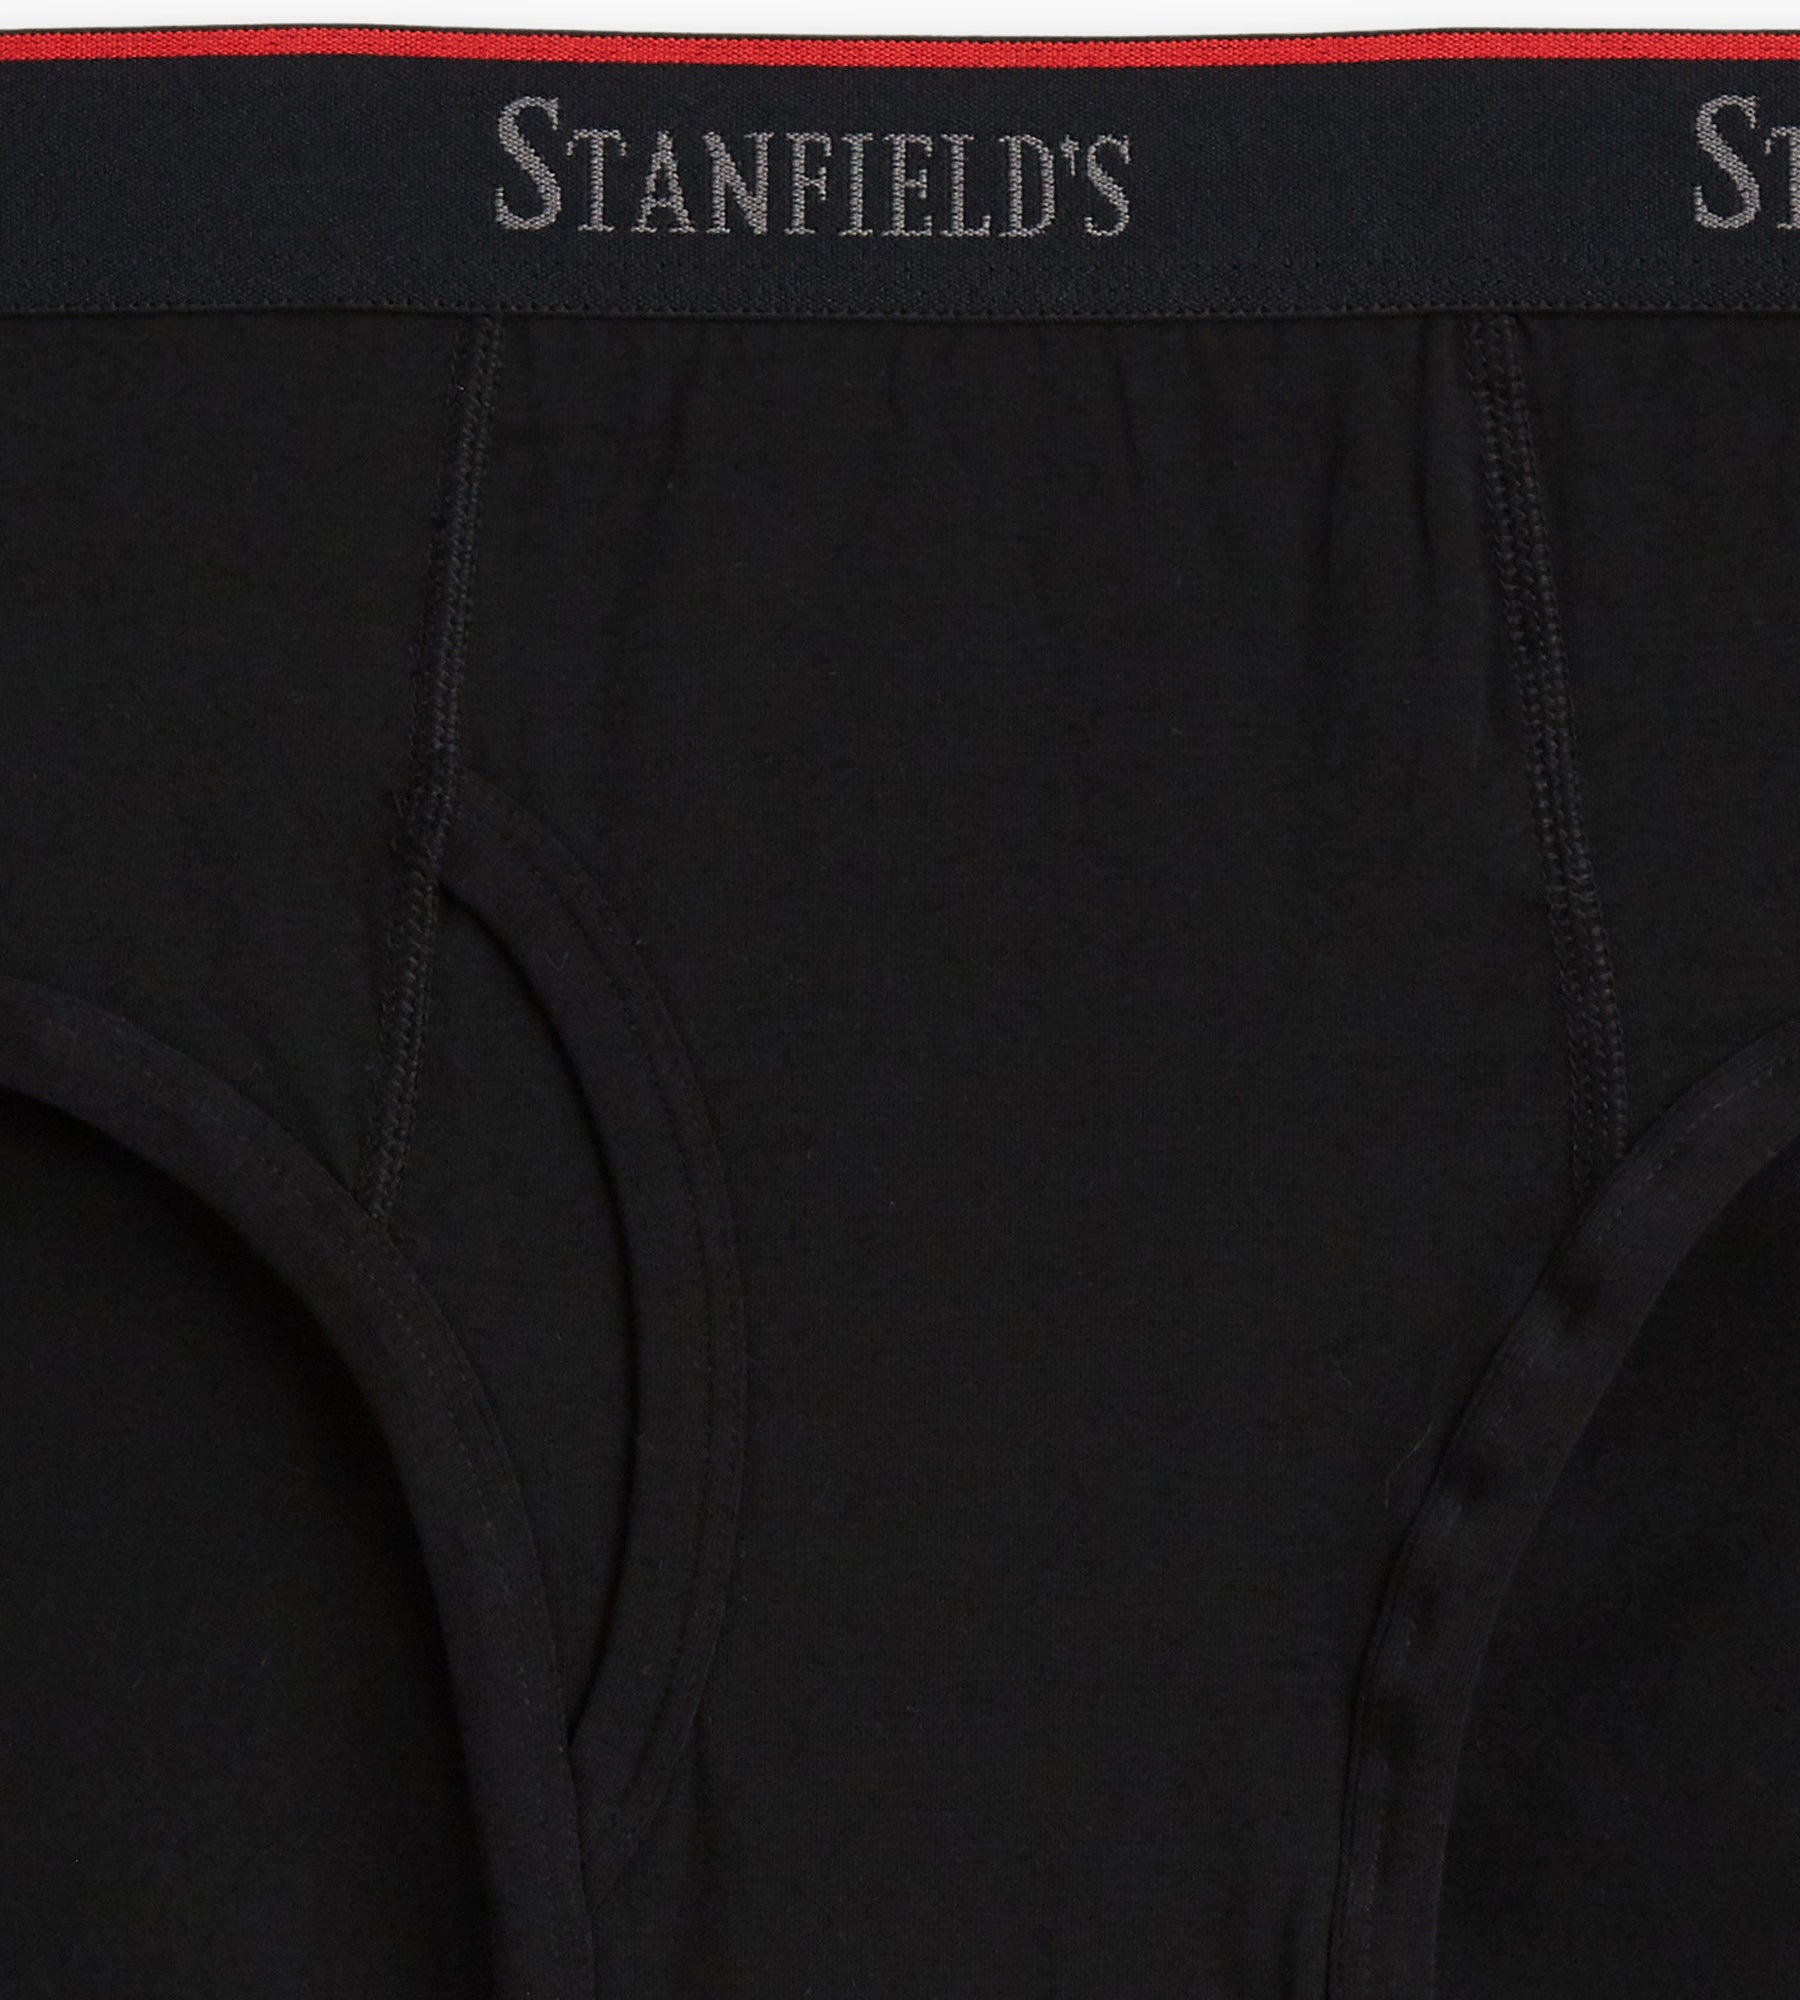 Kingsize Men's Big & Tall Classic Cotton Briefs 3-Pack Underwear 